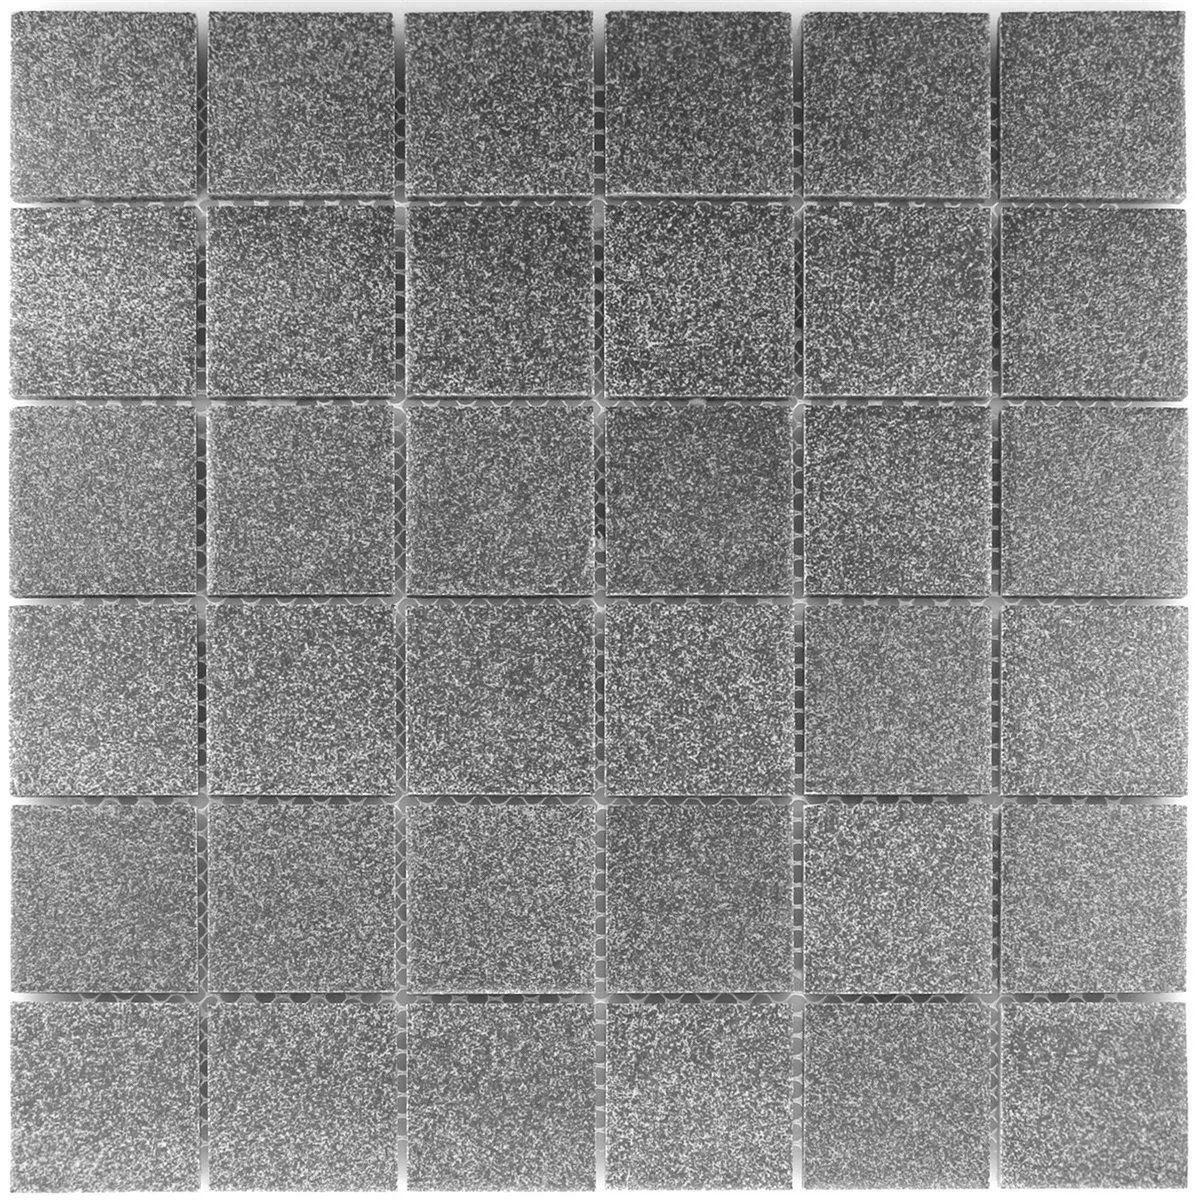 Sample Mosaic Tiles Ceramic Stonegrey Non-Slip Q48